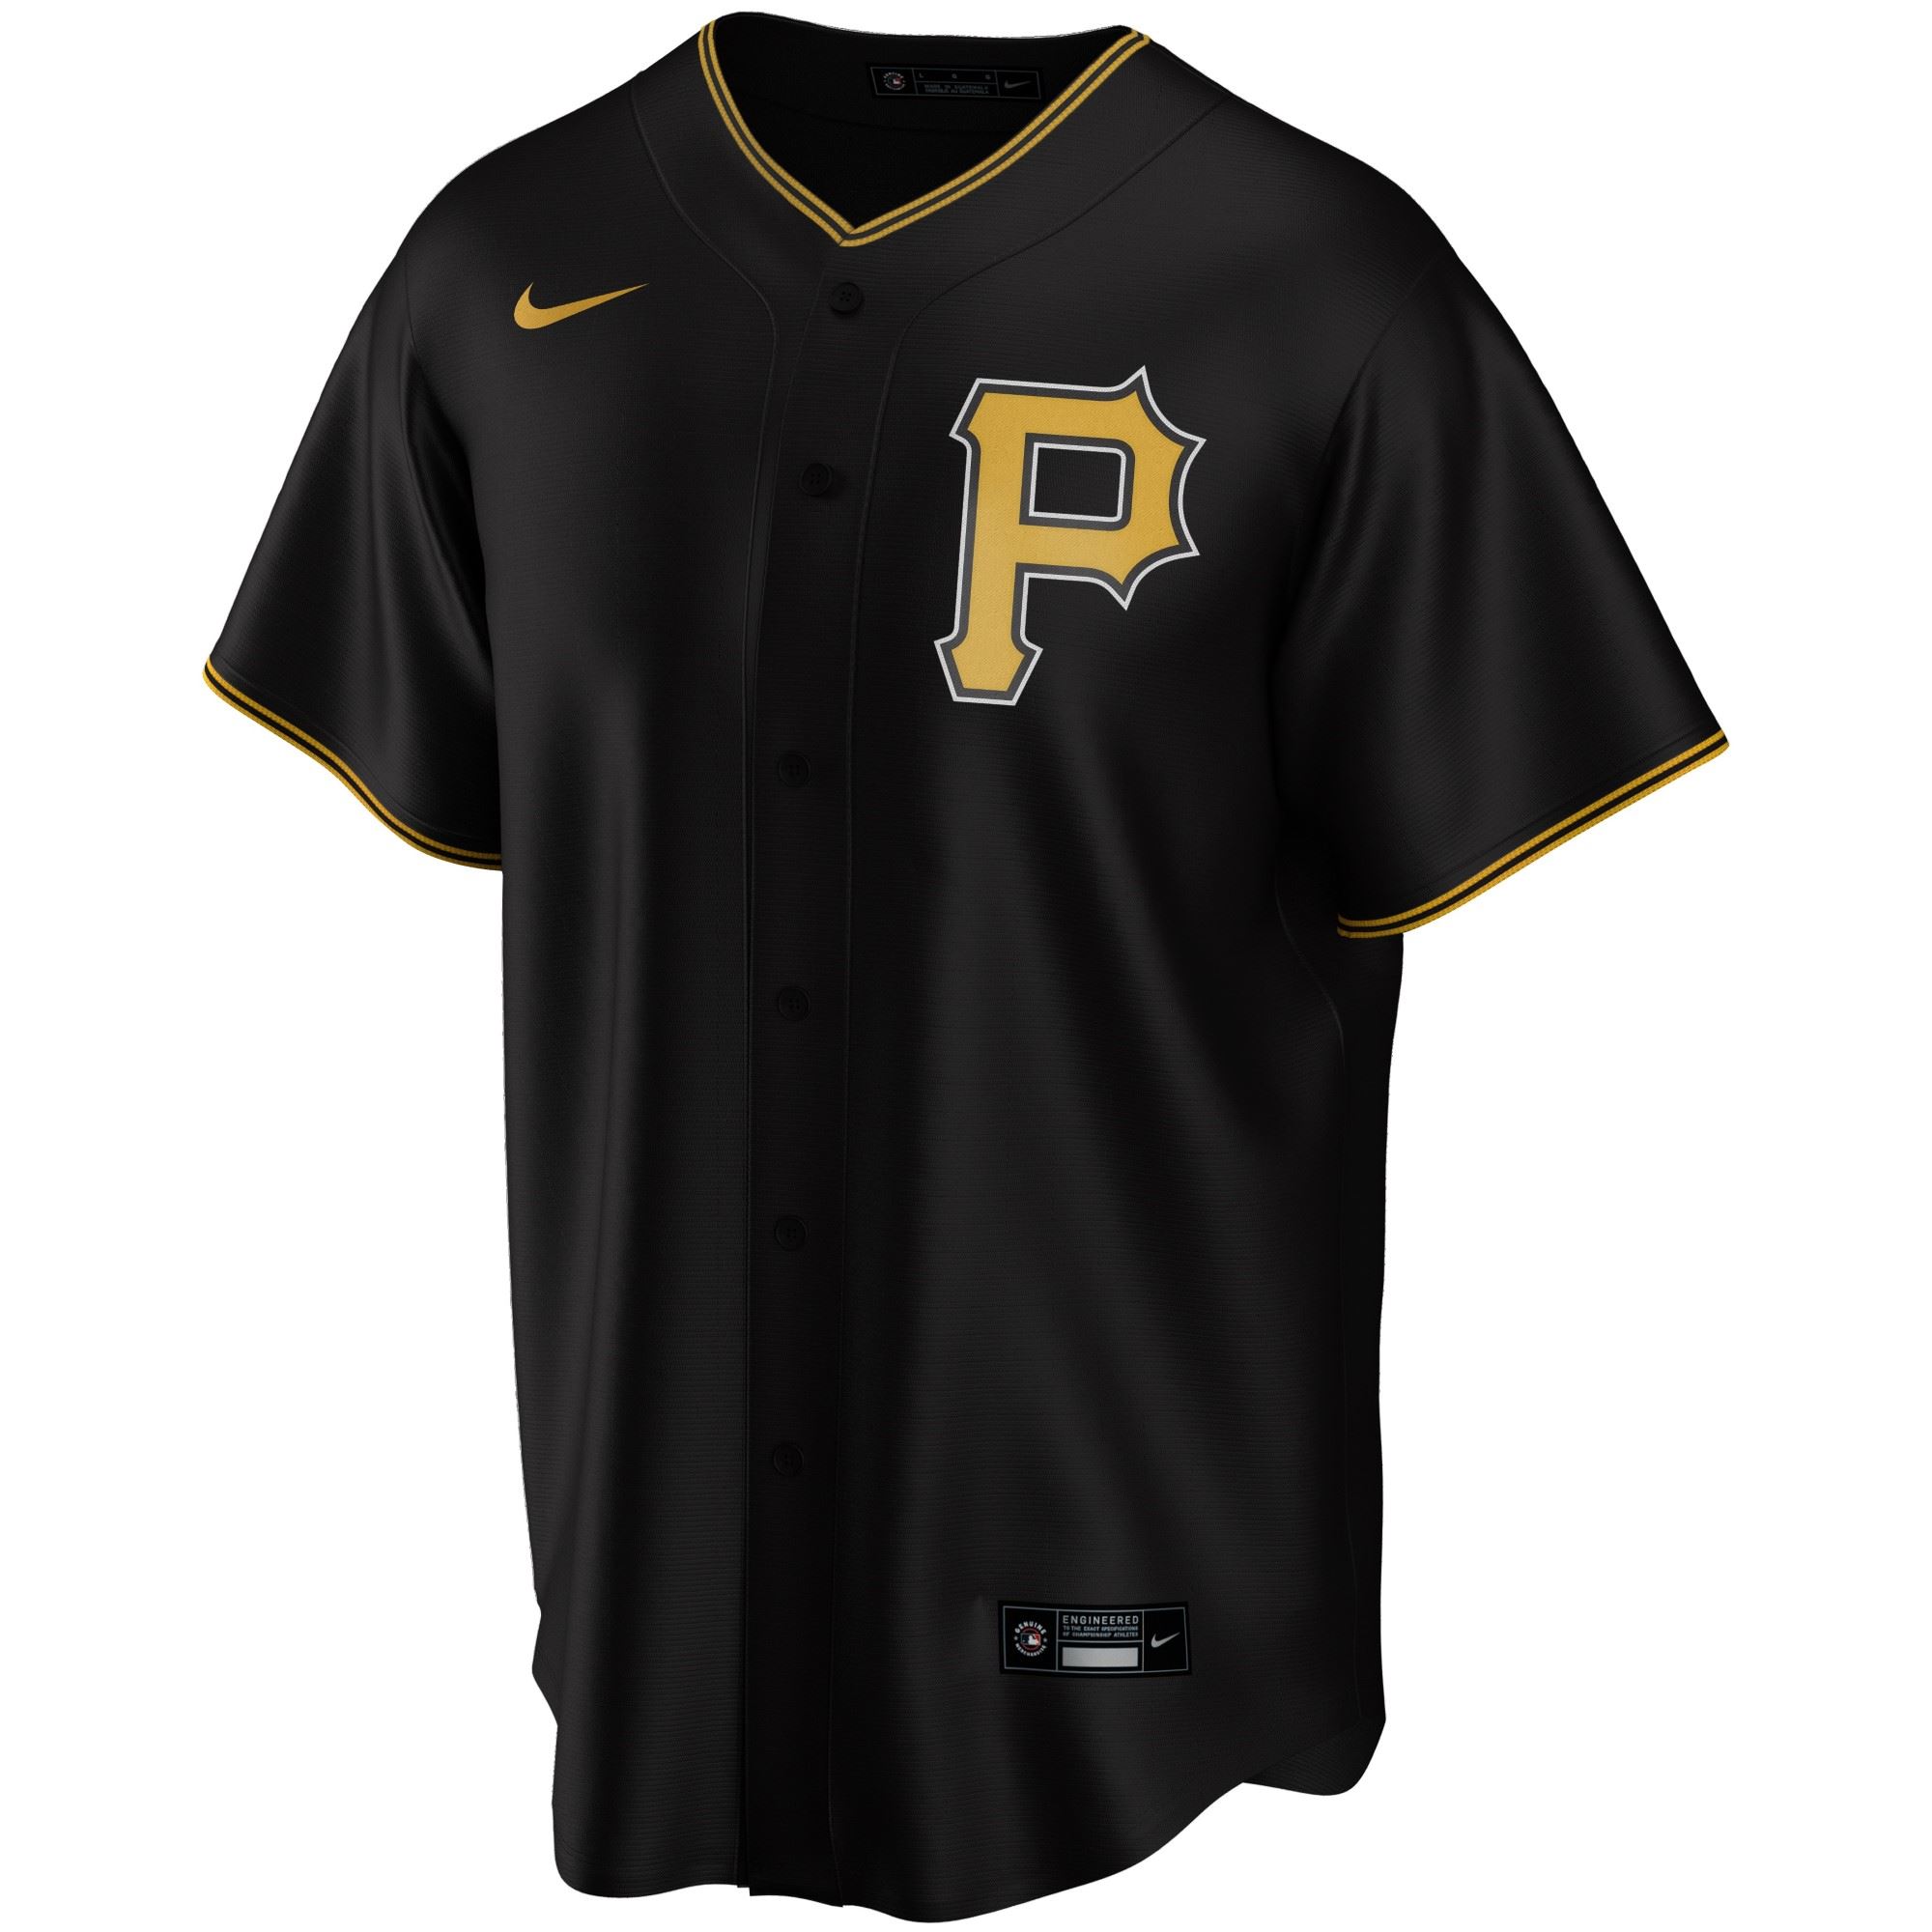 Pittsburgh Pirates Official MLB Replica Alternate Jersey Black Nike